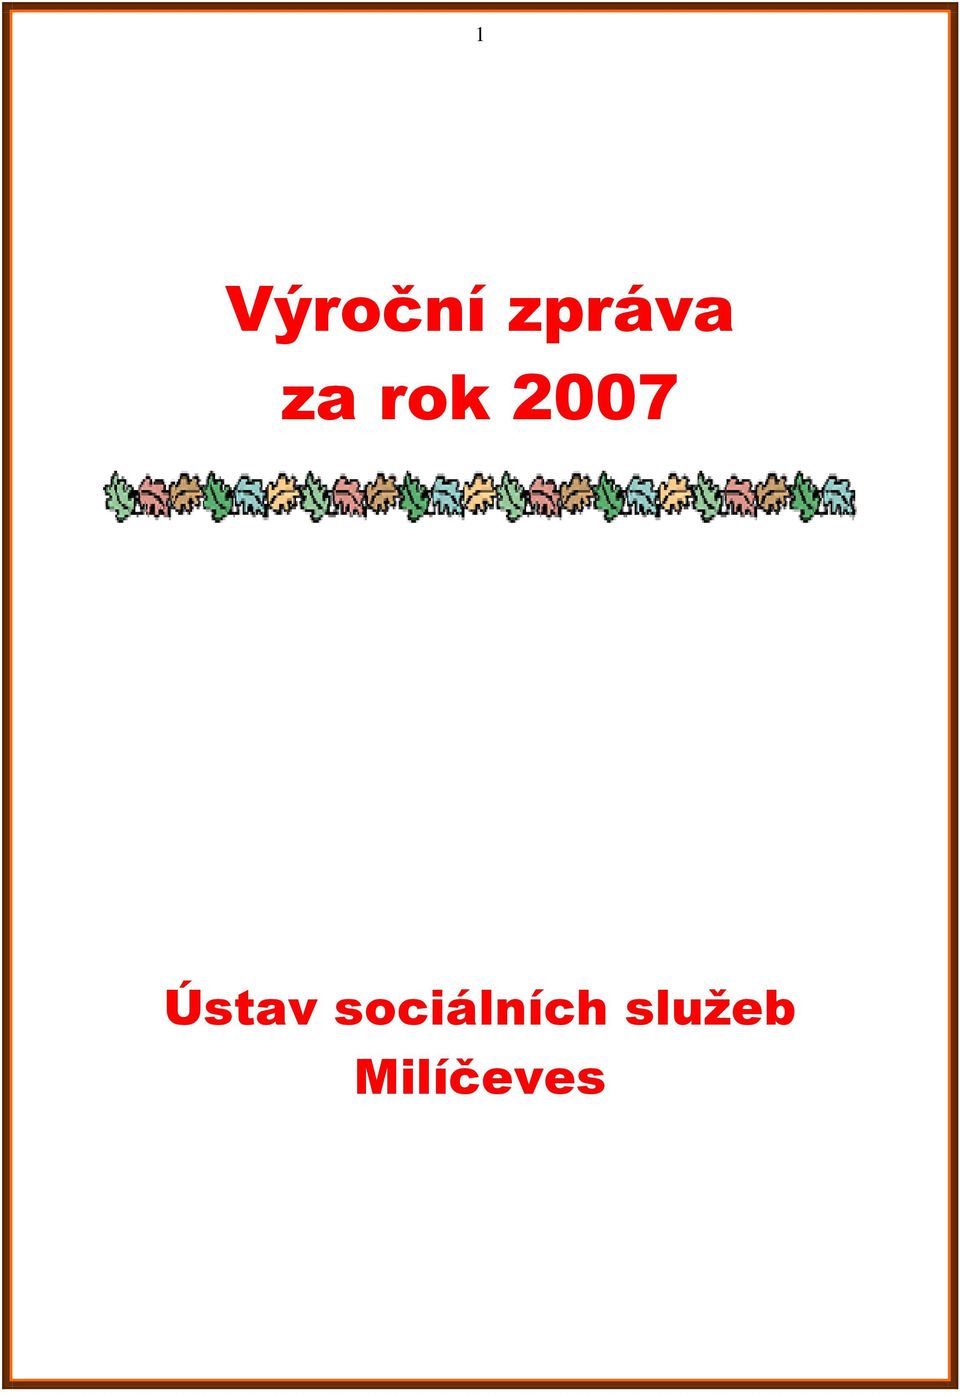 2007 Ústav